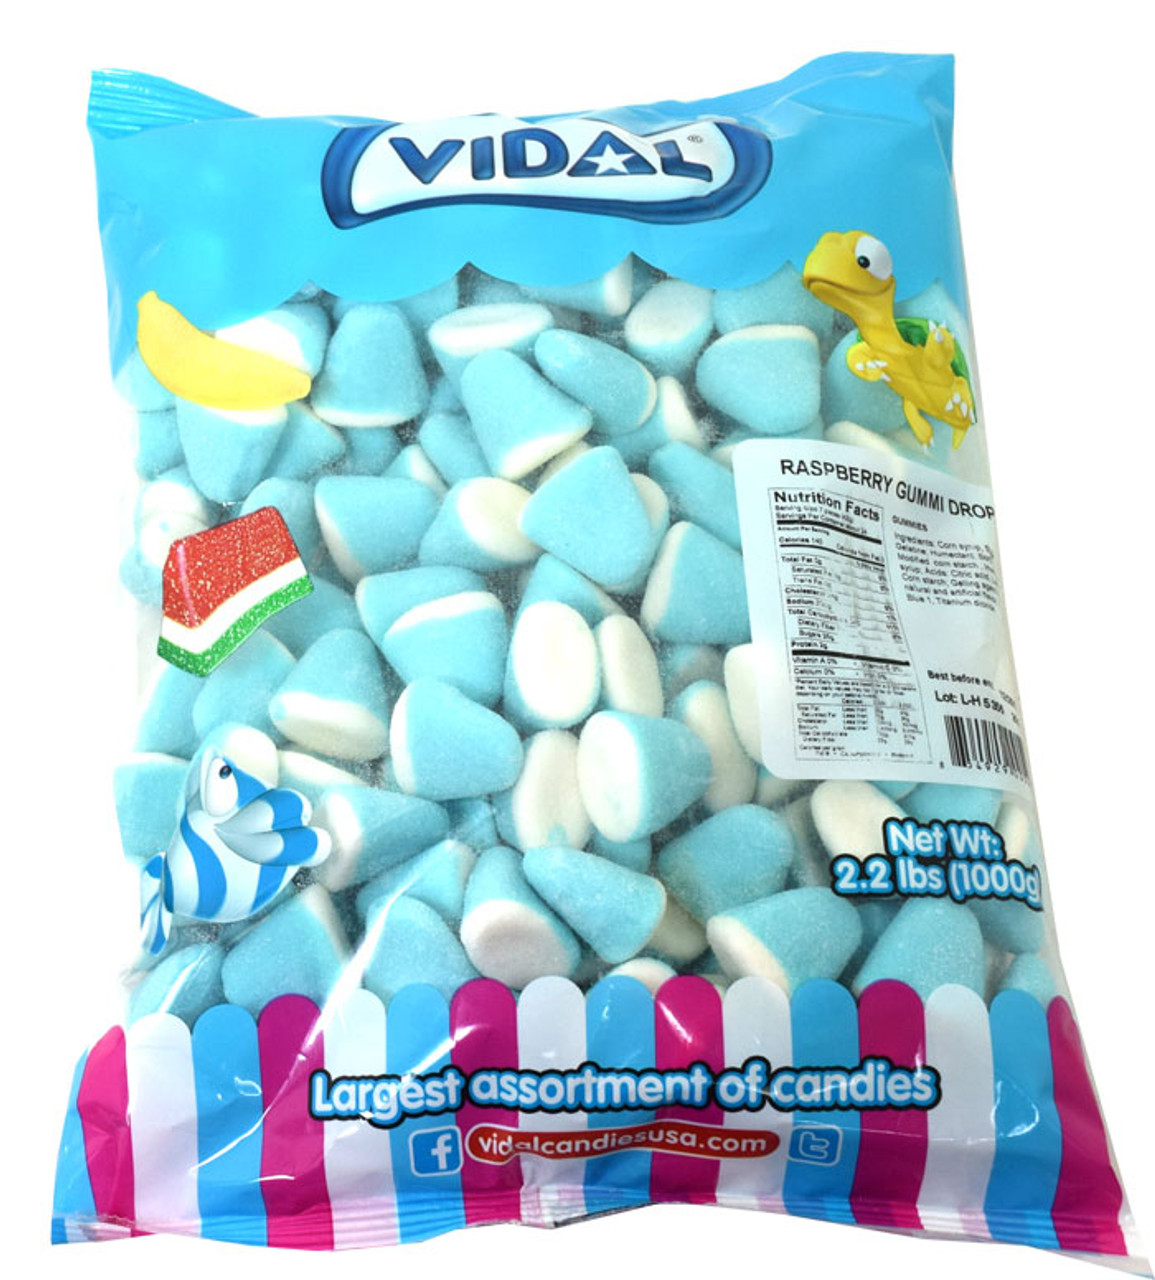 Blue & White Candy Gummi Drops 2.2lb Bag